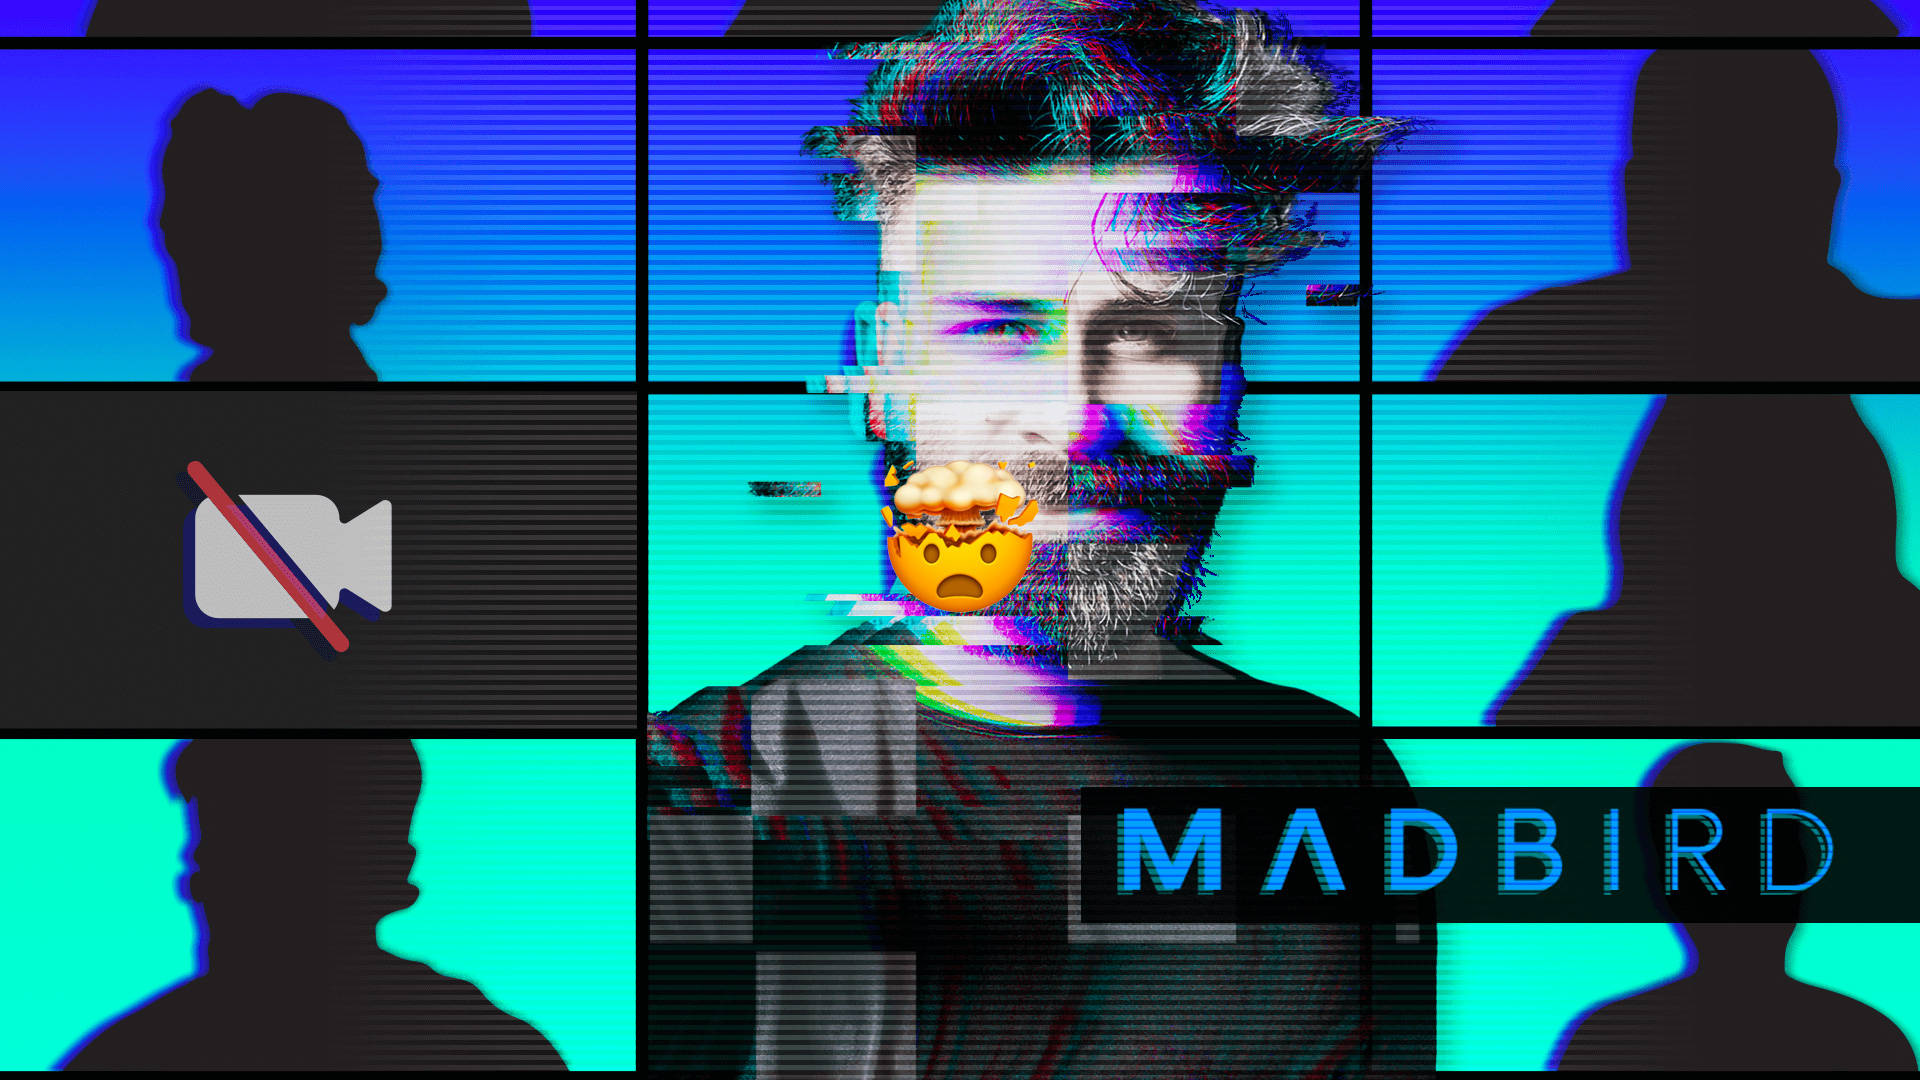 It’s a Mad, Mad, Madbird